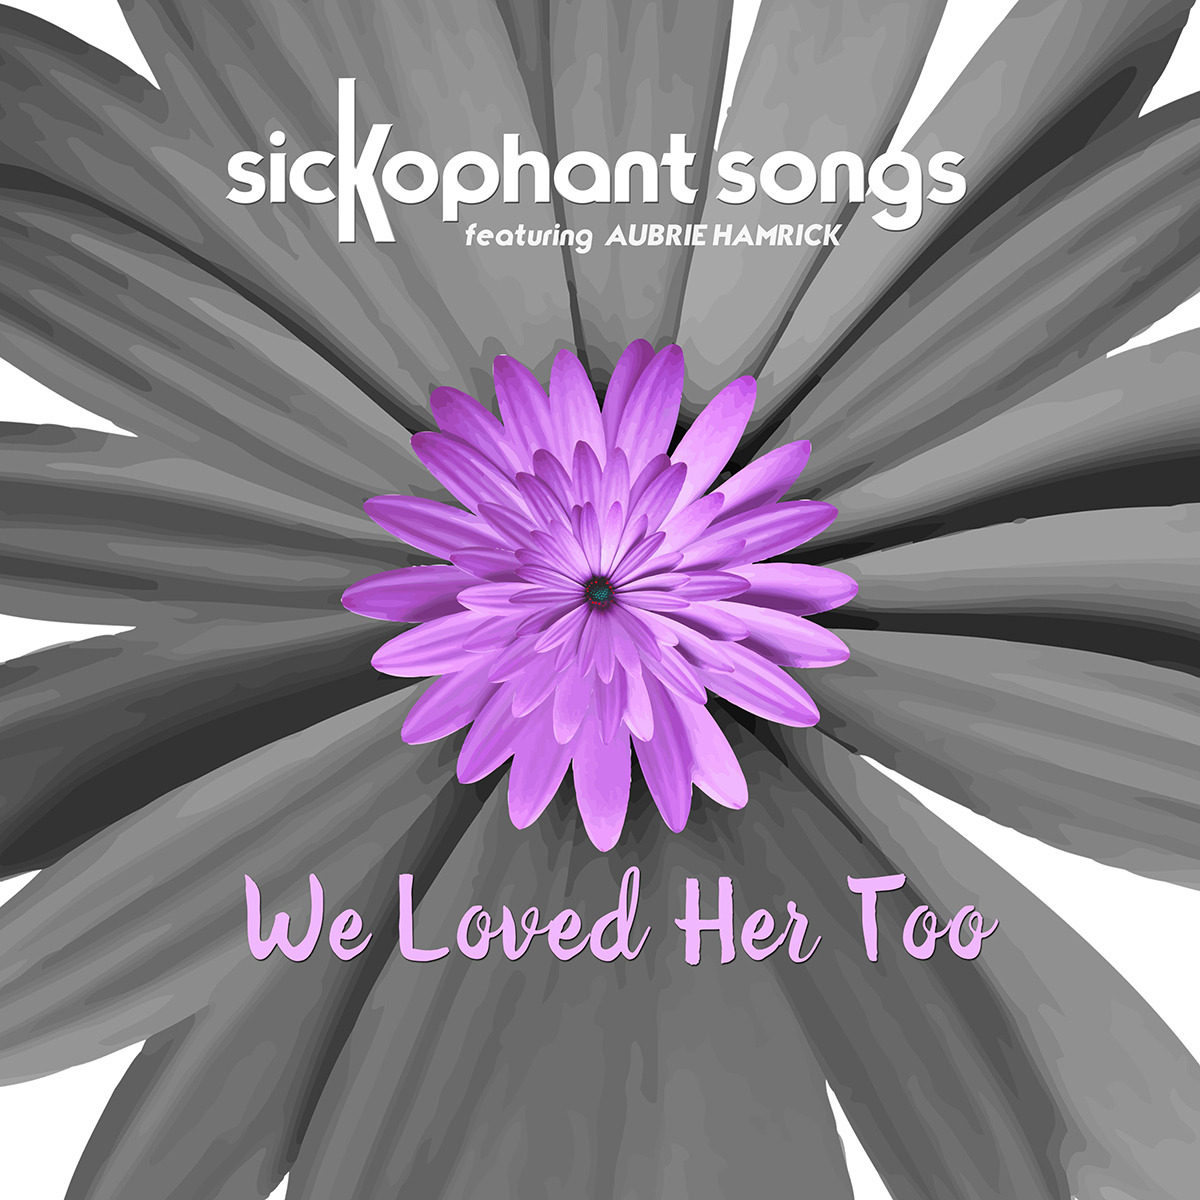 Sickophant Songs “We Loved Her Too”